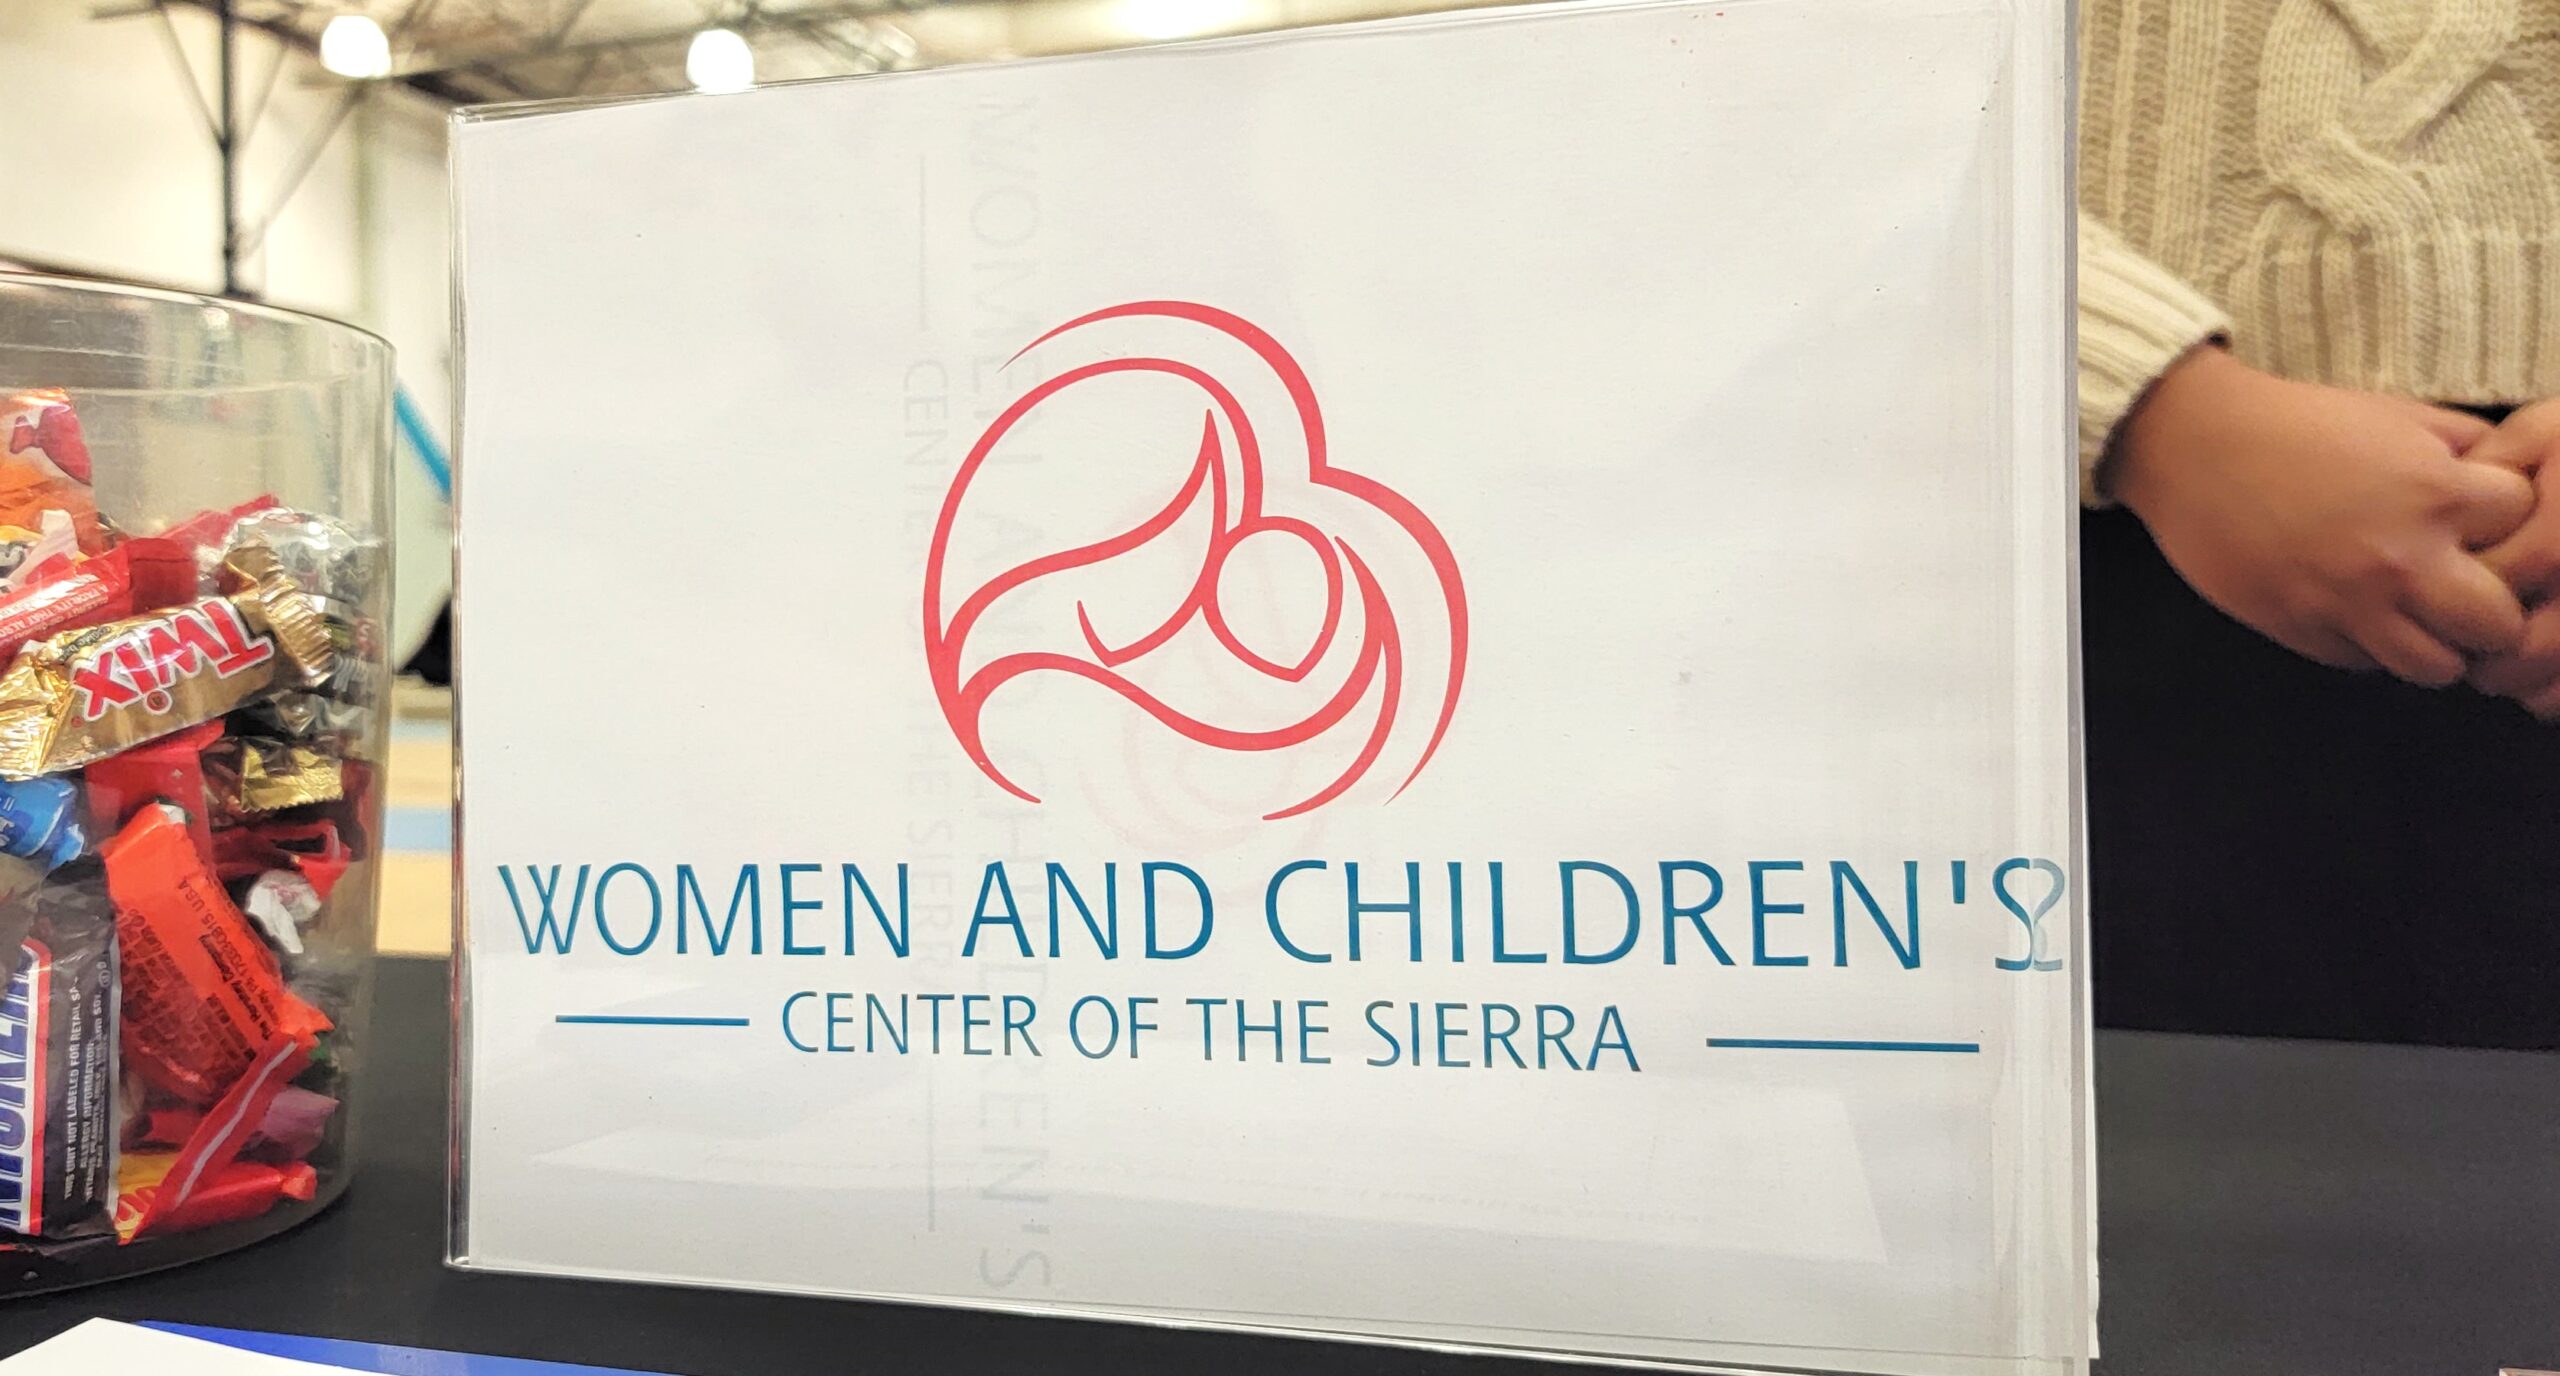 Women and children's center of the sierra.